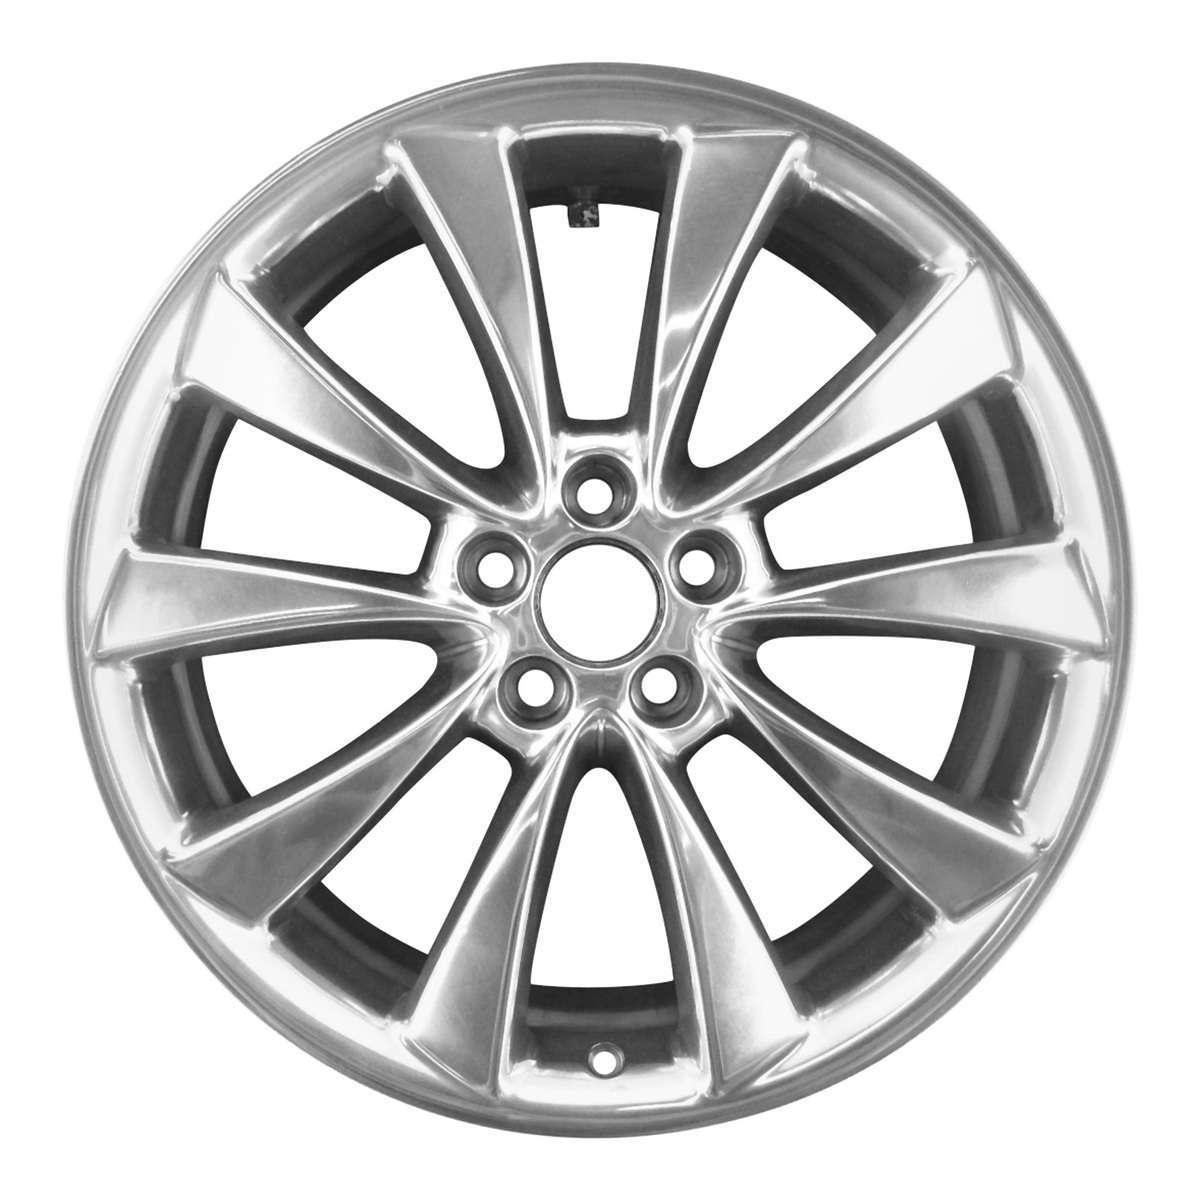 2012 Lincoln MKT 20" OEM Wheel Rim W3824P